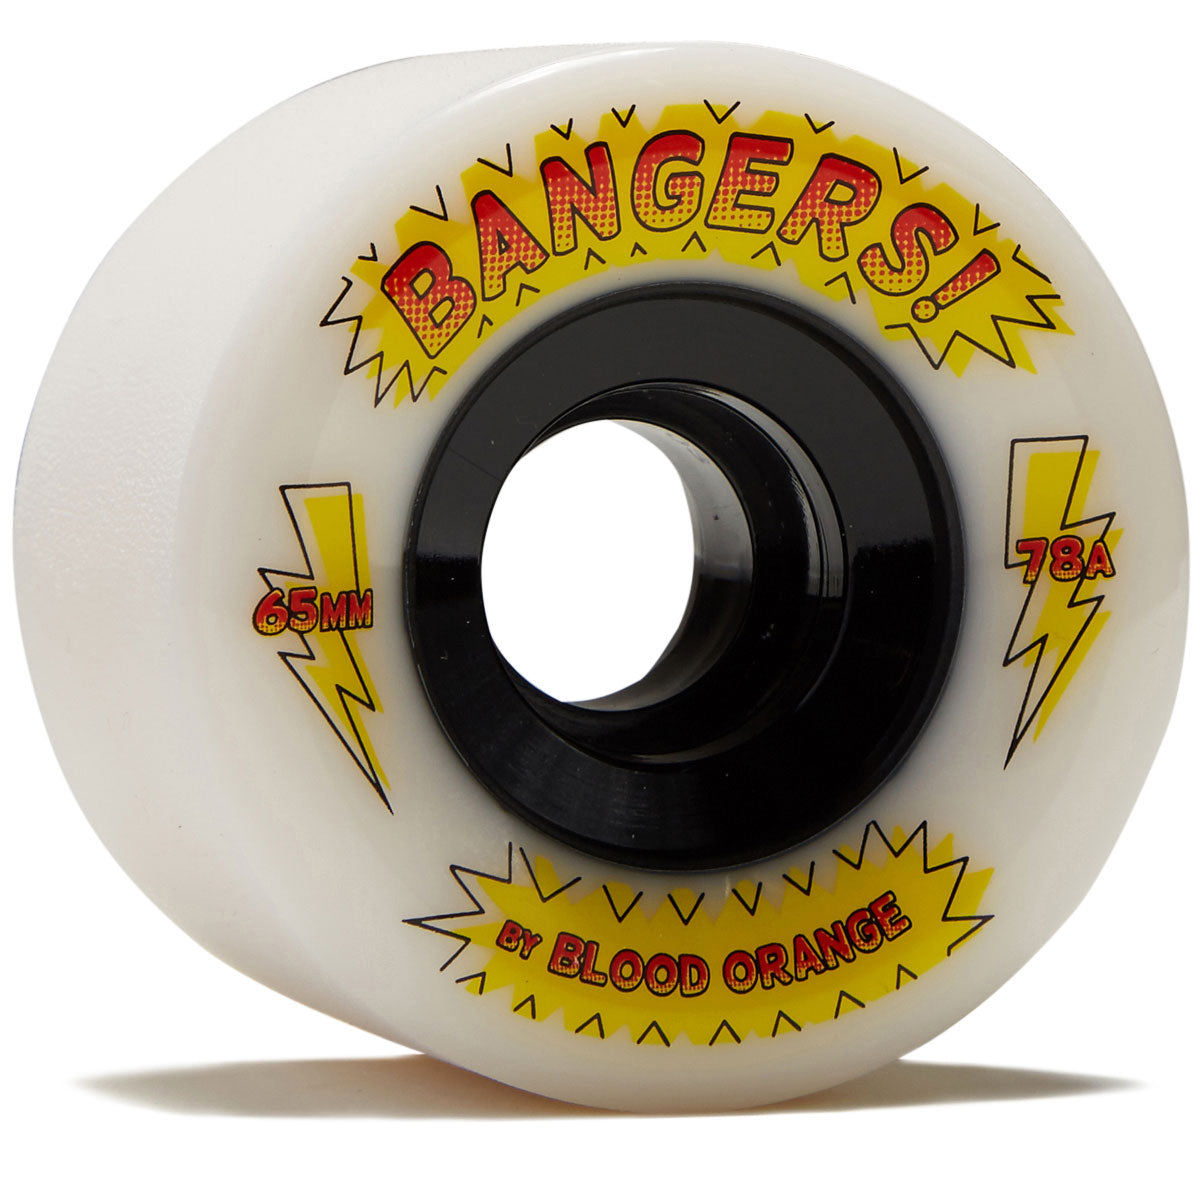 Blood Orange Bangers 78a Longboard Wheels - 65mm image 1